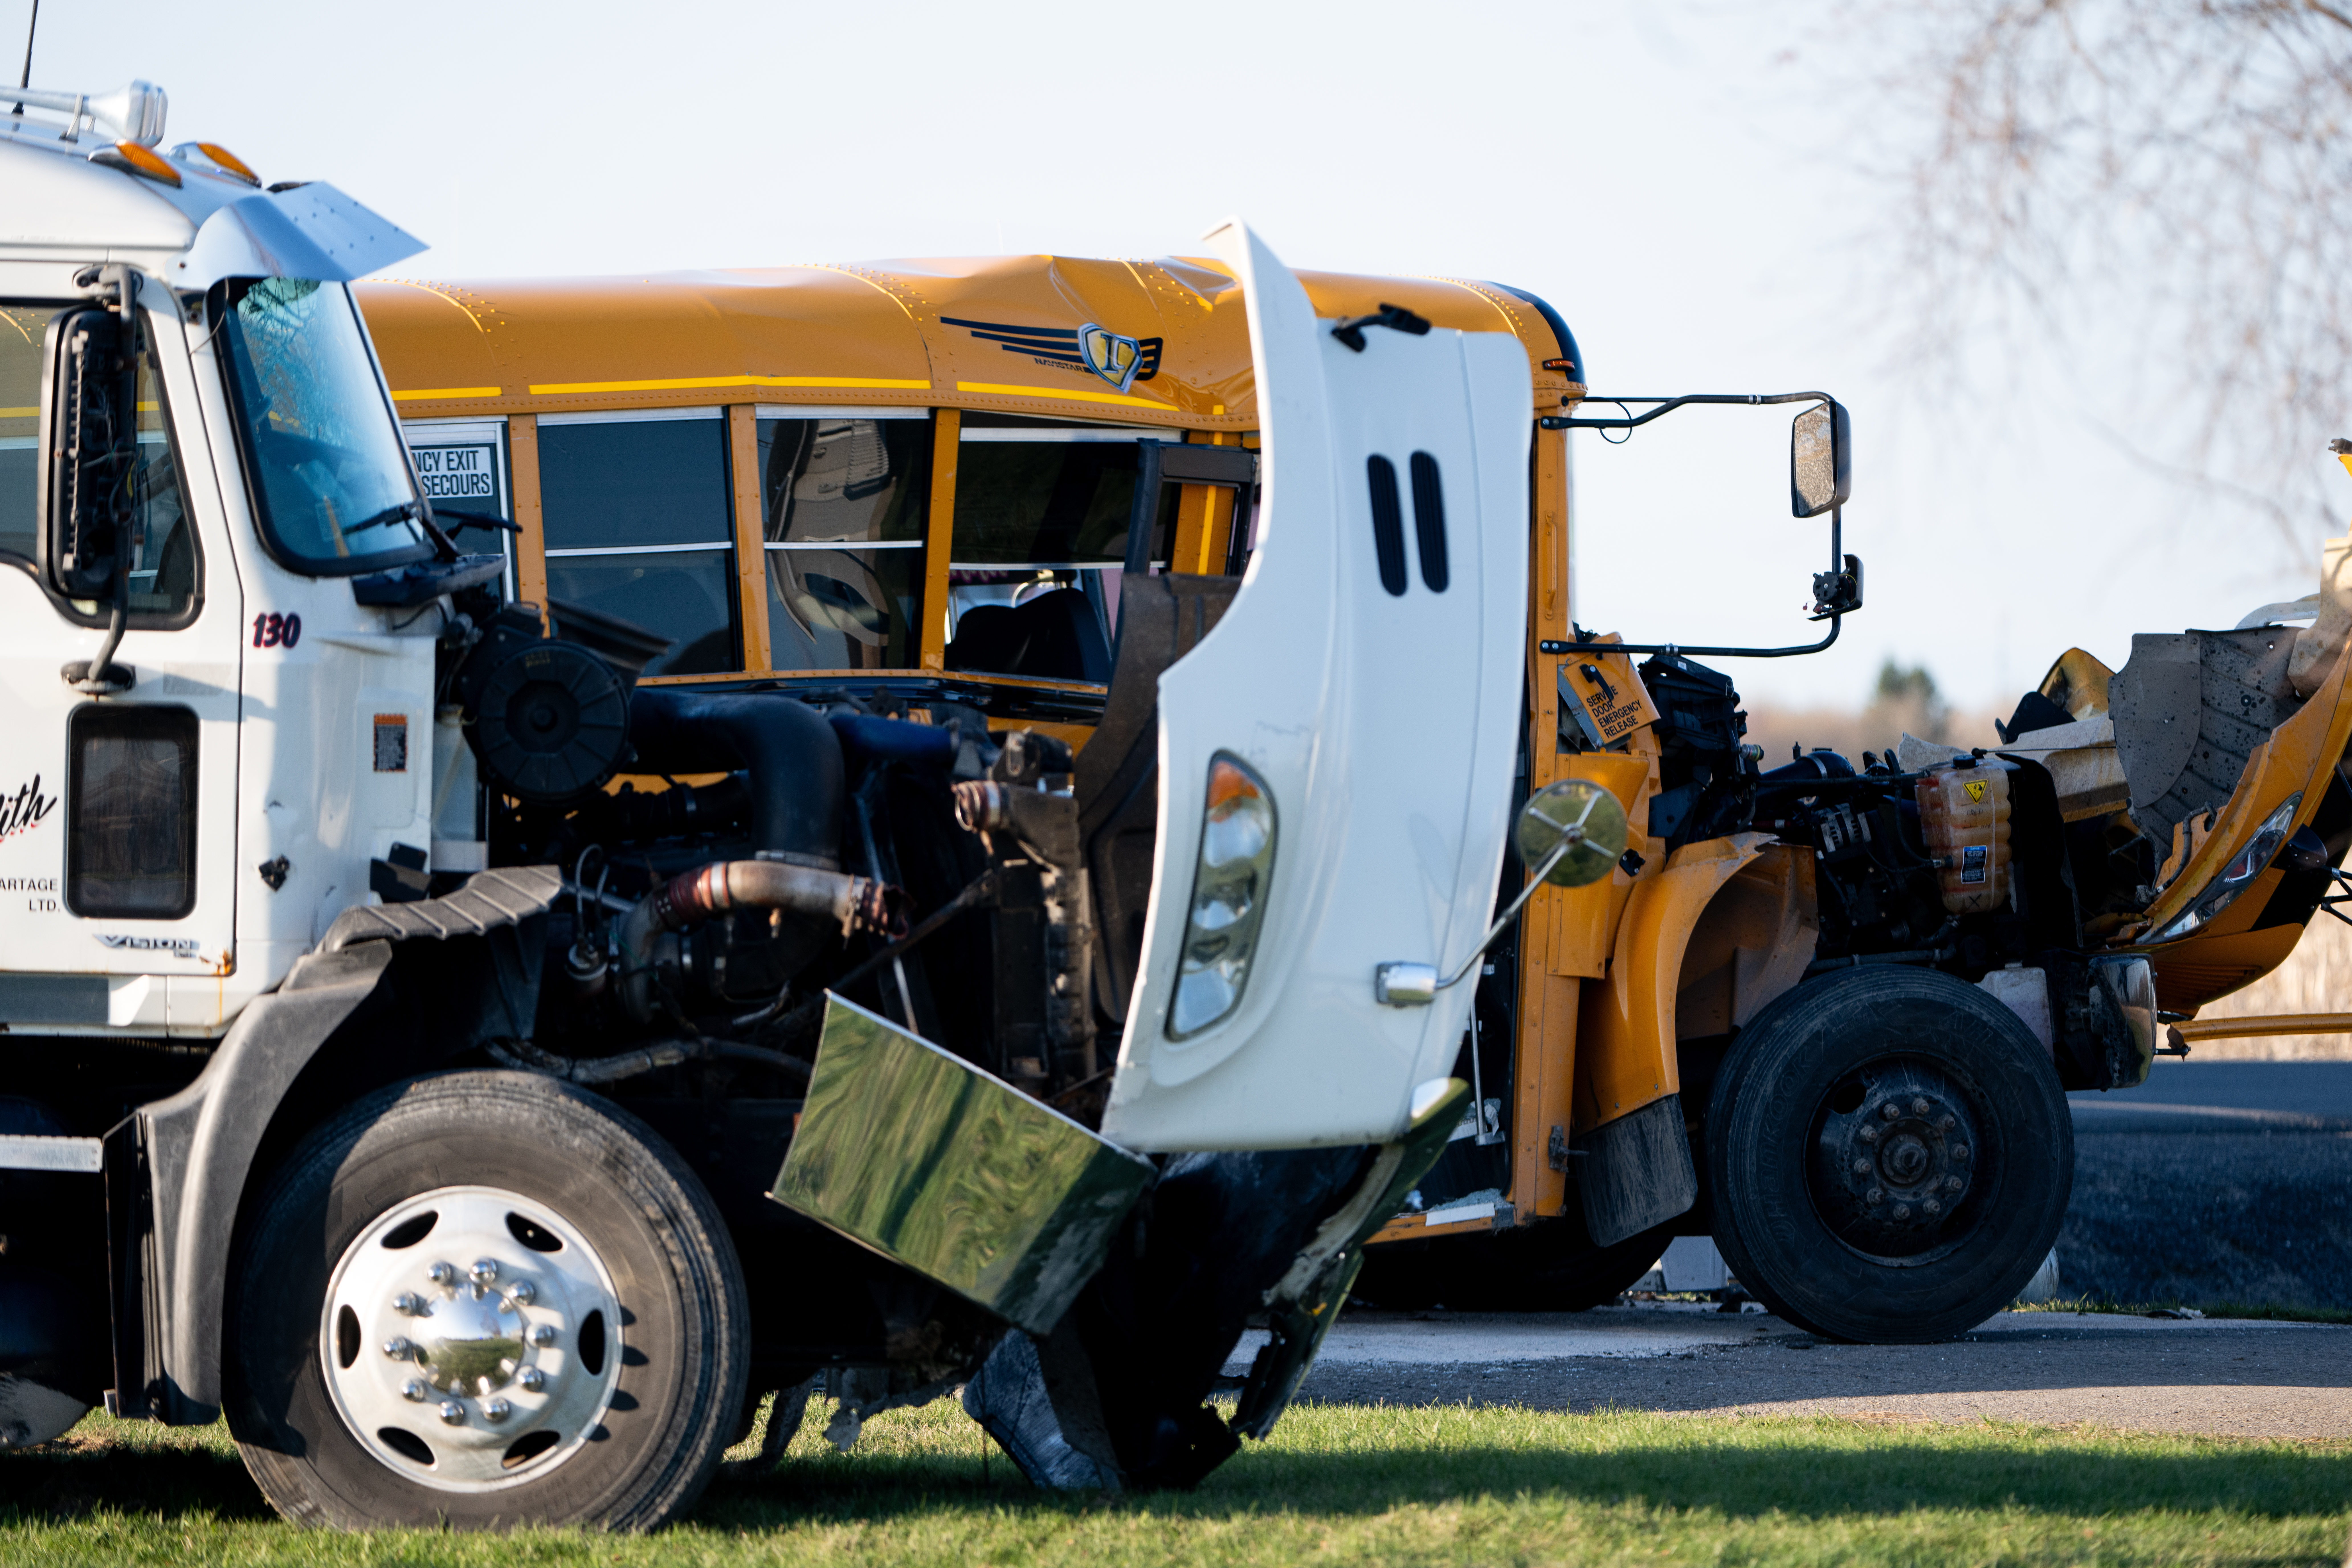 3 students, school bus driver taken to hospital after crash near Ottawa